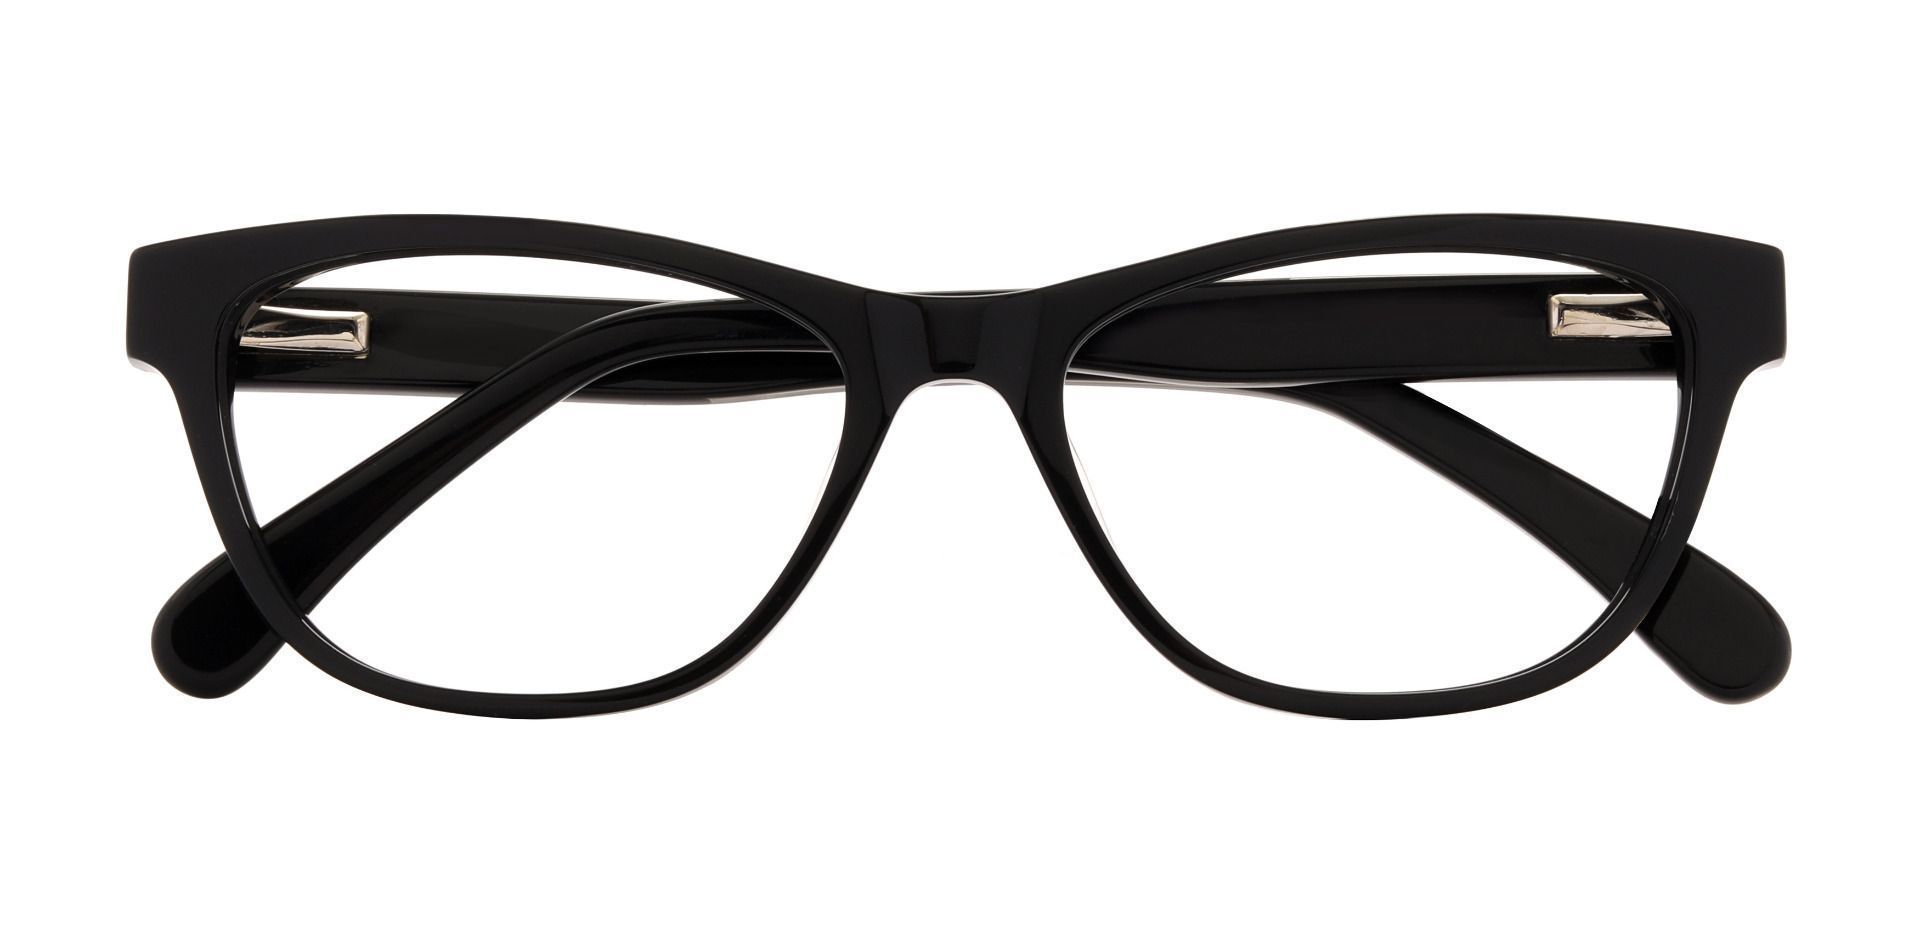 Bayside Cat Eye Prescription Glasses - Black